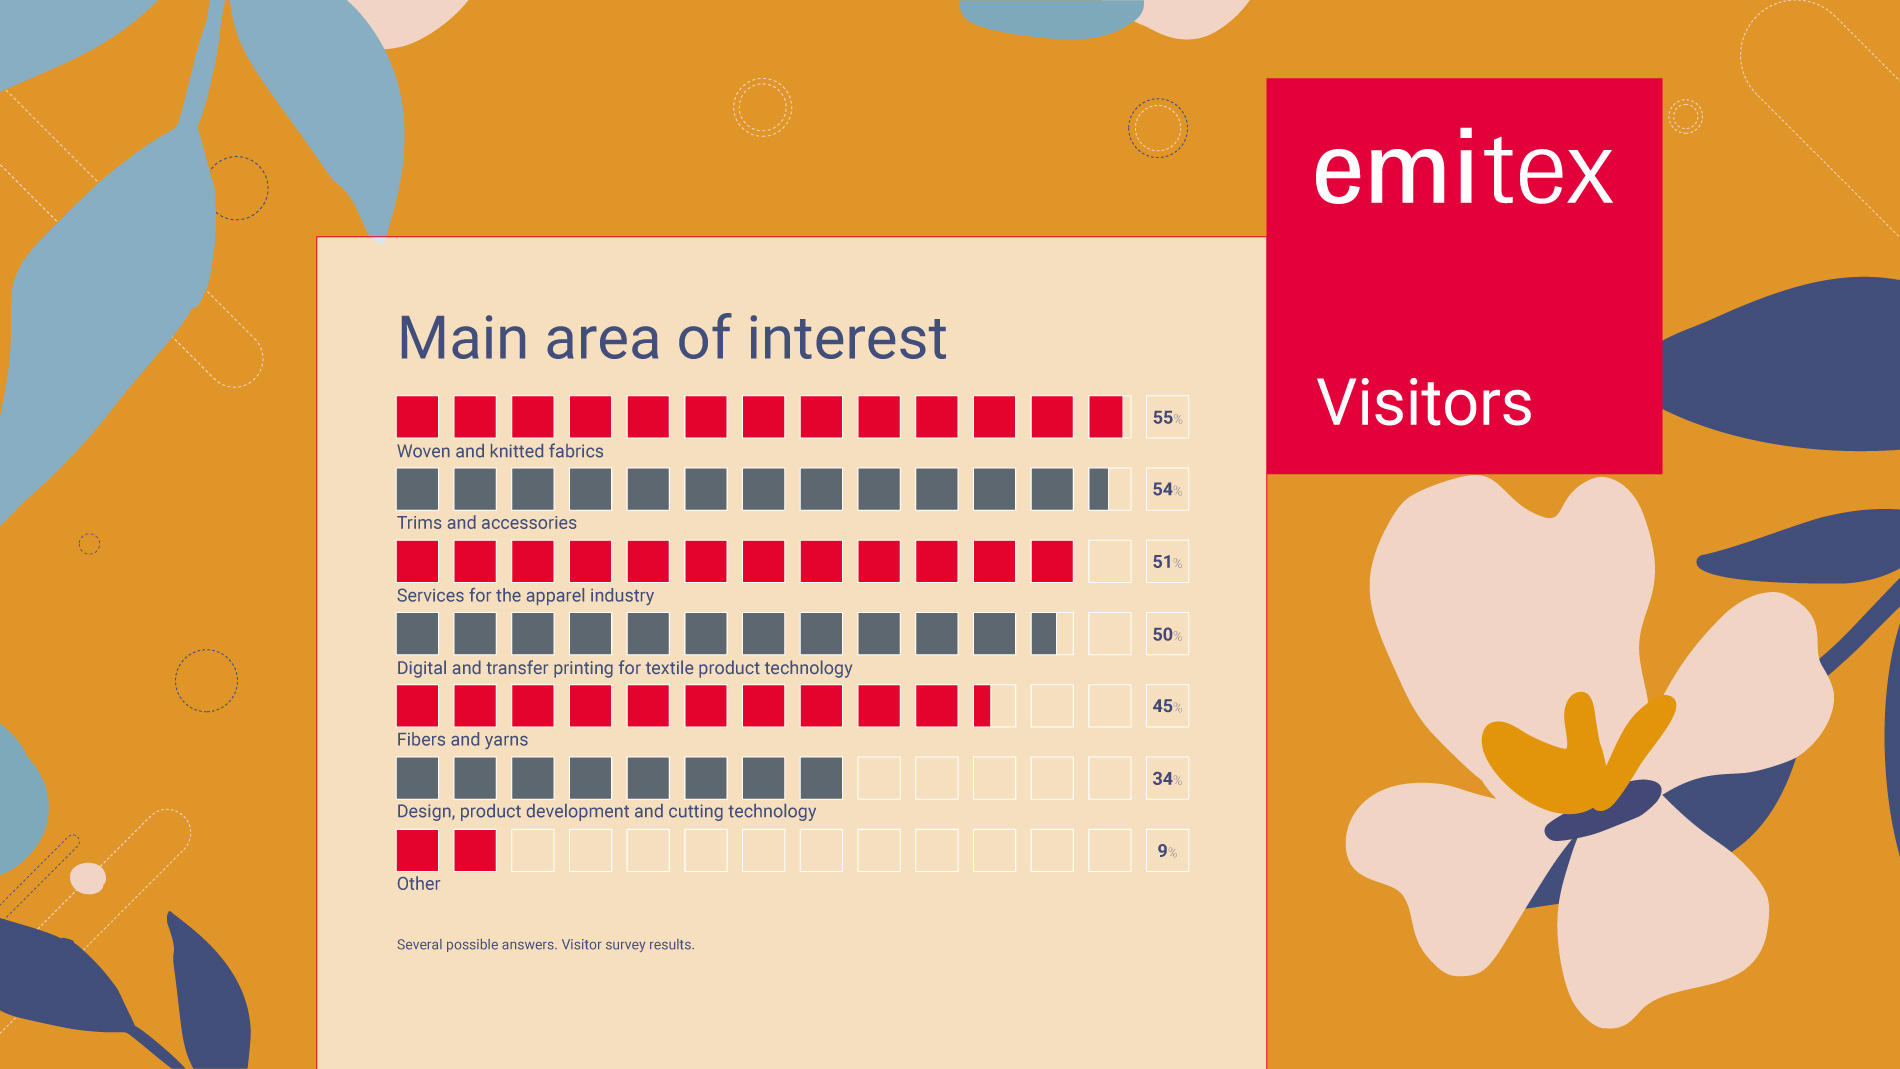 Emitex: Visitors - Main area of interest